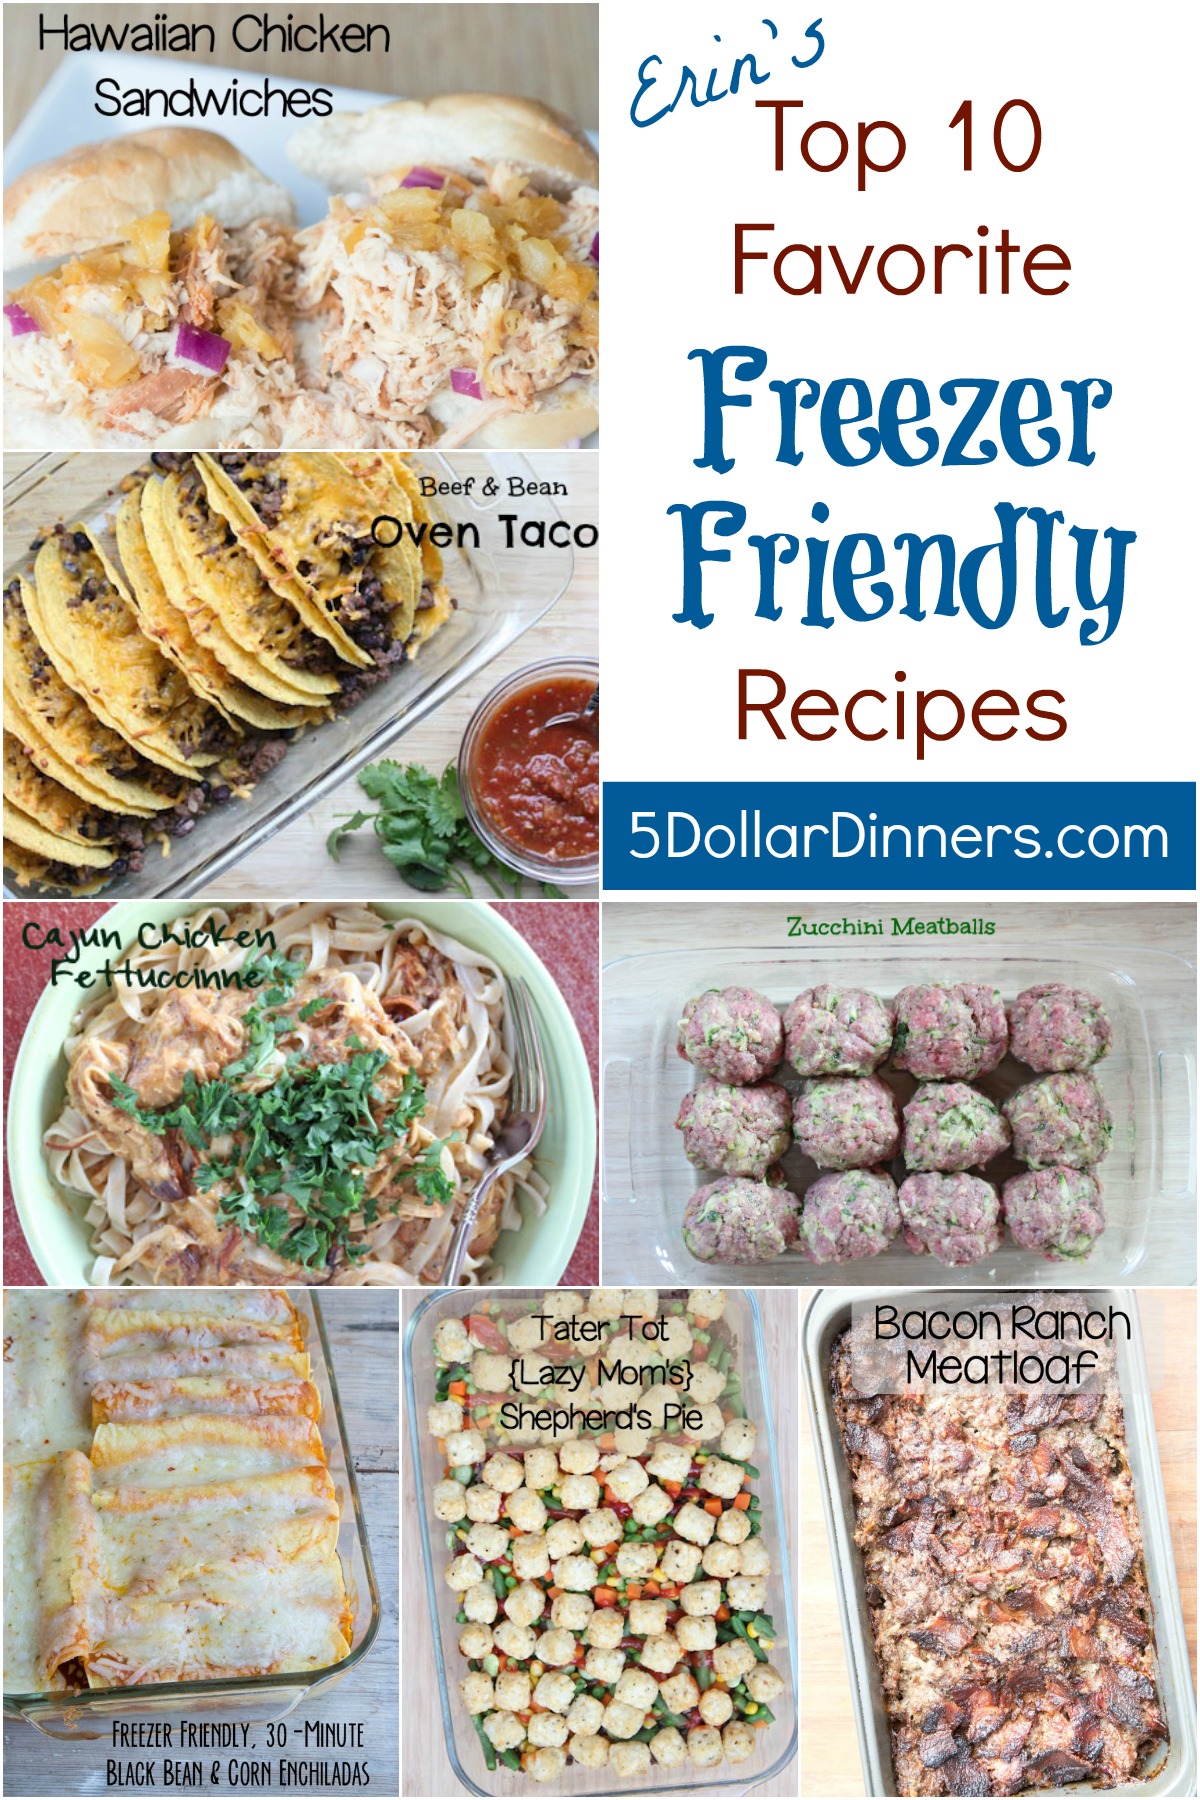 Gluten-Free Freezer Meals: DIGITAL & PRINTED PDF + BAG HOLDERS - Erin Chase  Store